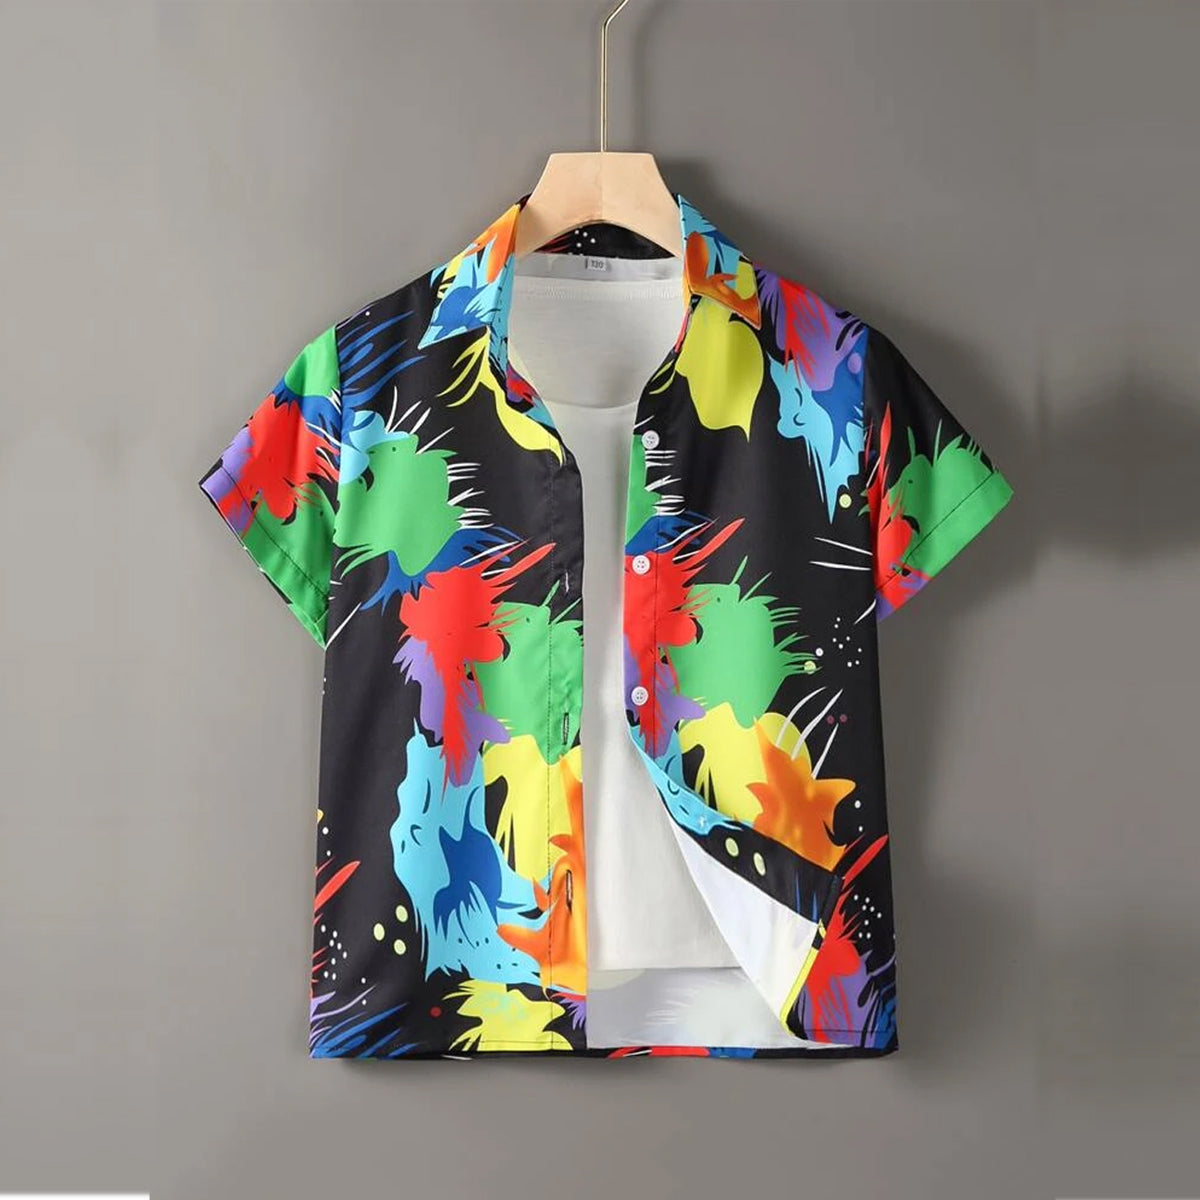 Venutaloza Boys Multicolor Graphic & Dinosaur Animal Designer Button Front Shirt For Boy.